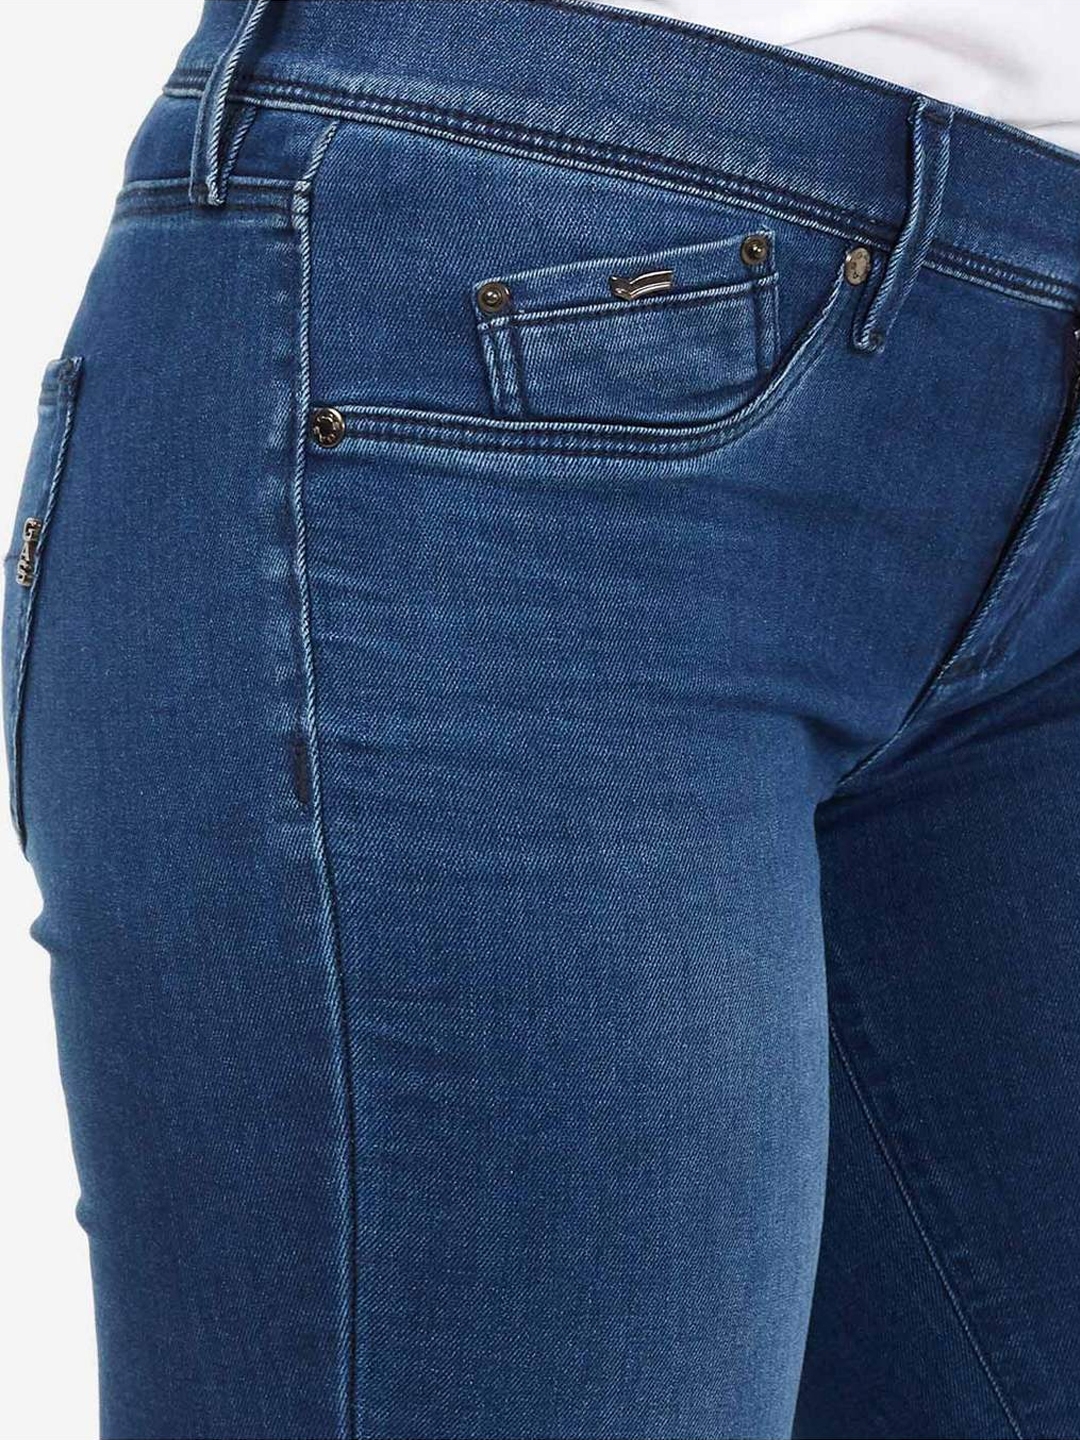 Women's skinny fit indigo mid wash Sumatra jeans